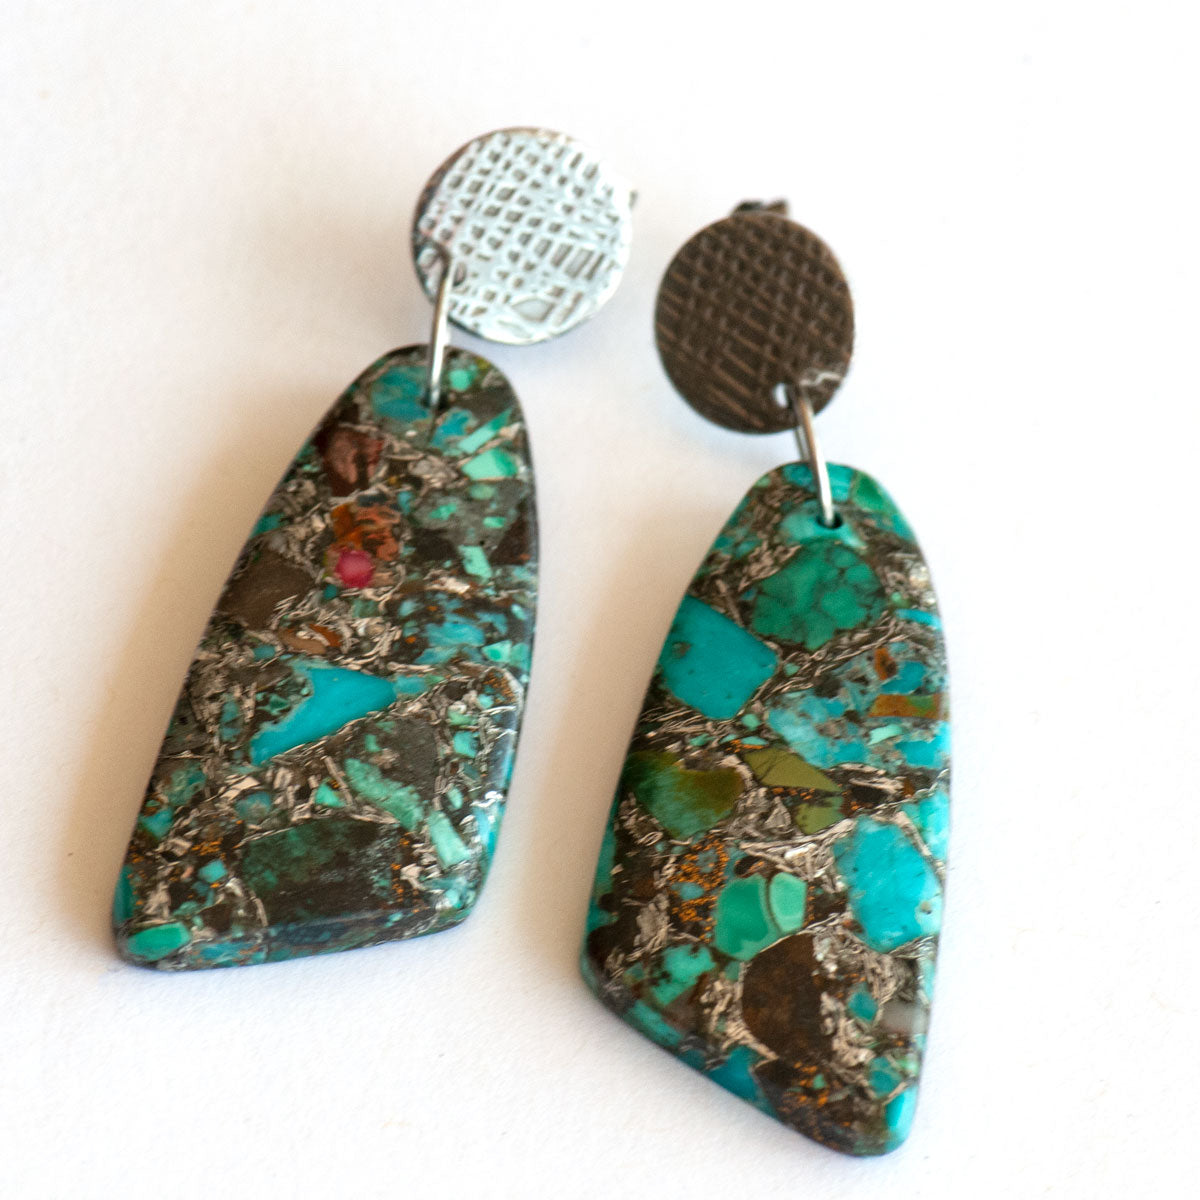 Handmade Turquoise mosaic earrings on stainless steel studs